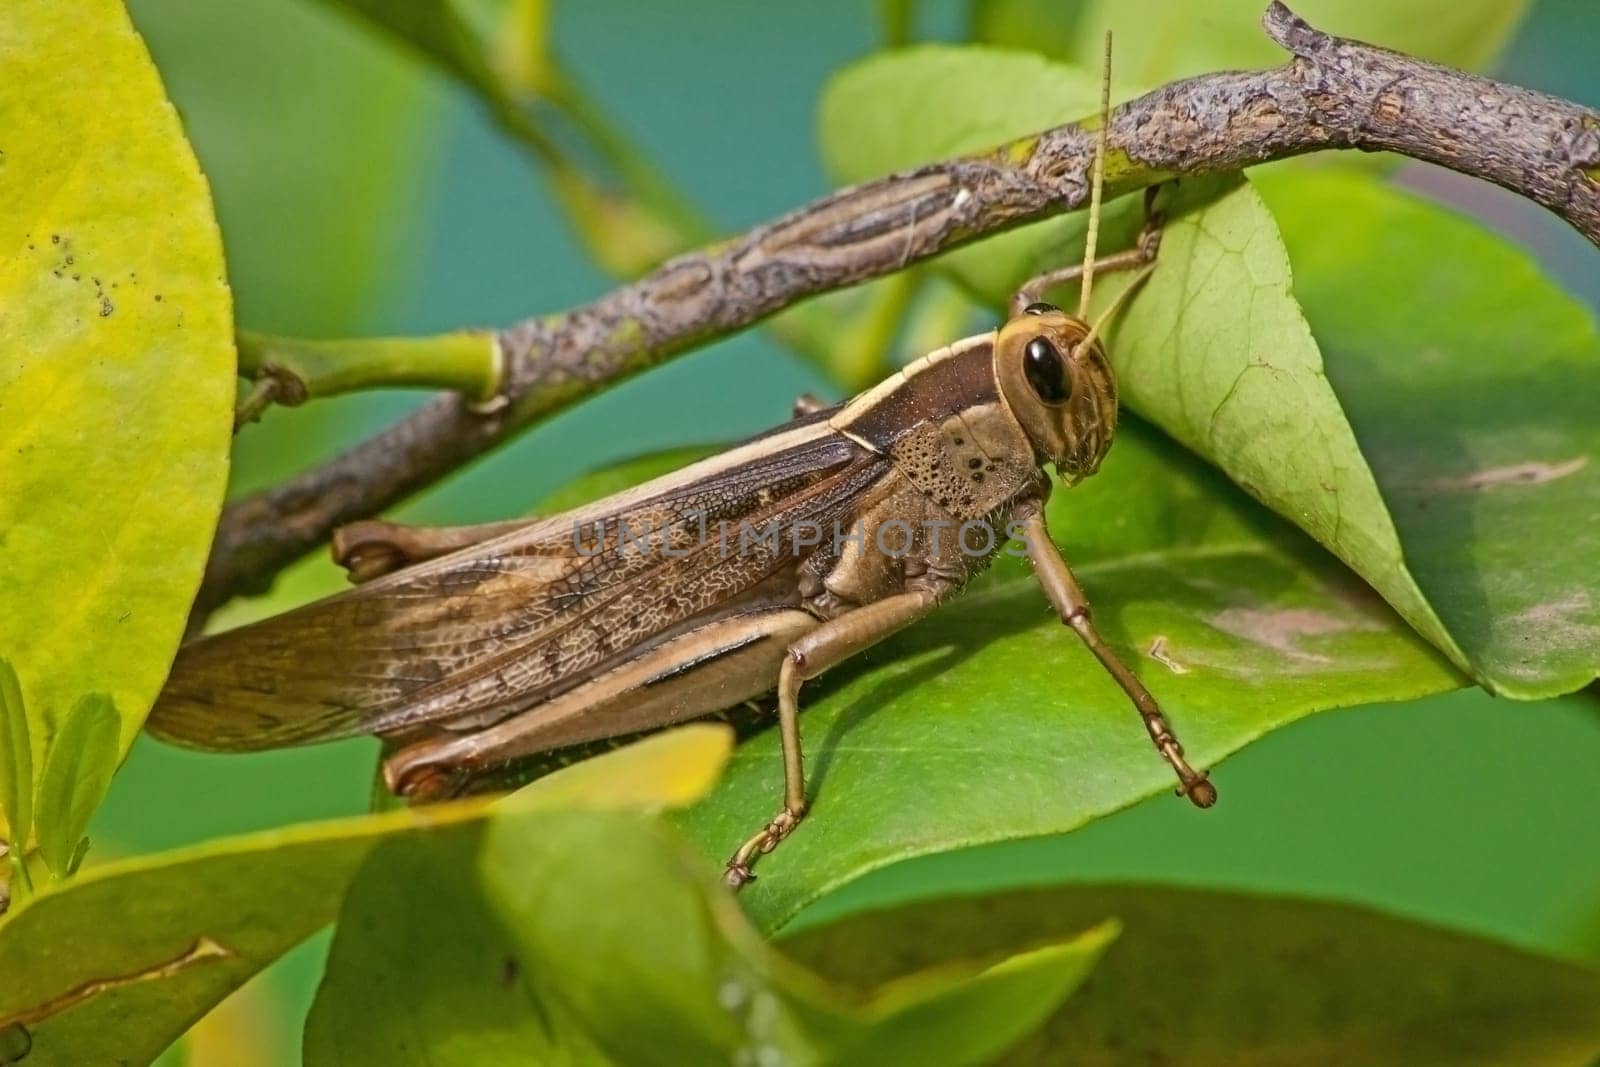 Grasshopper (Cyrtacanthacris aeruginosa) 13458 by kobus_peche